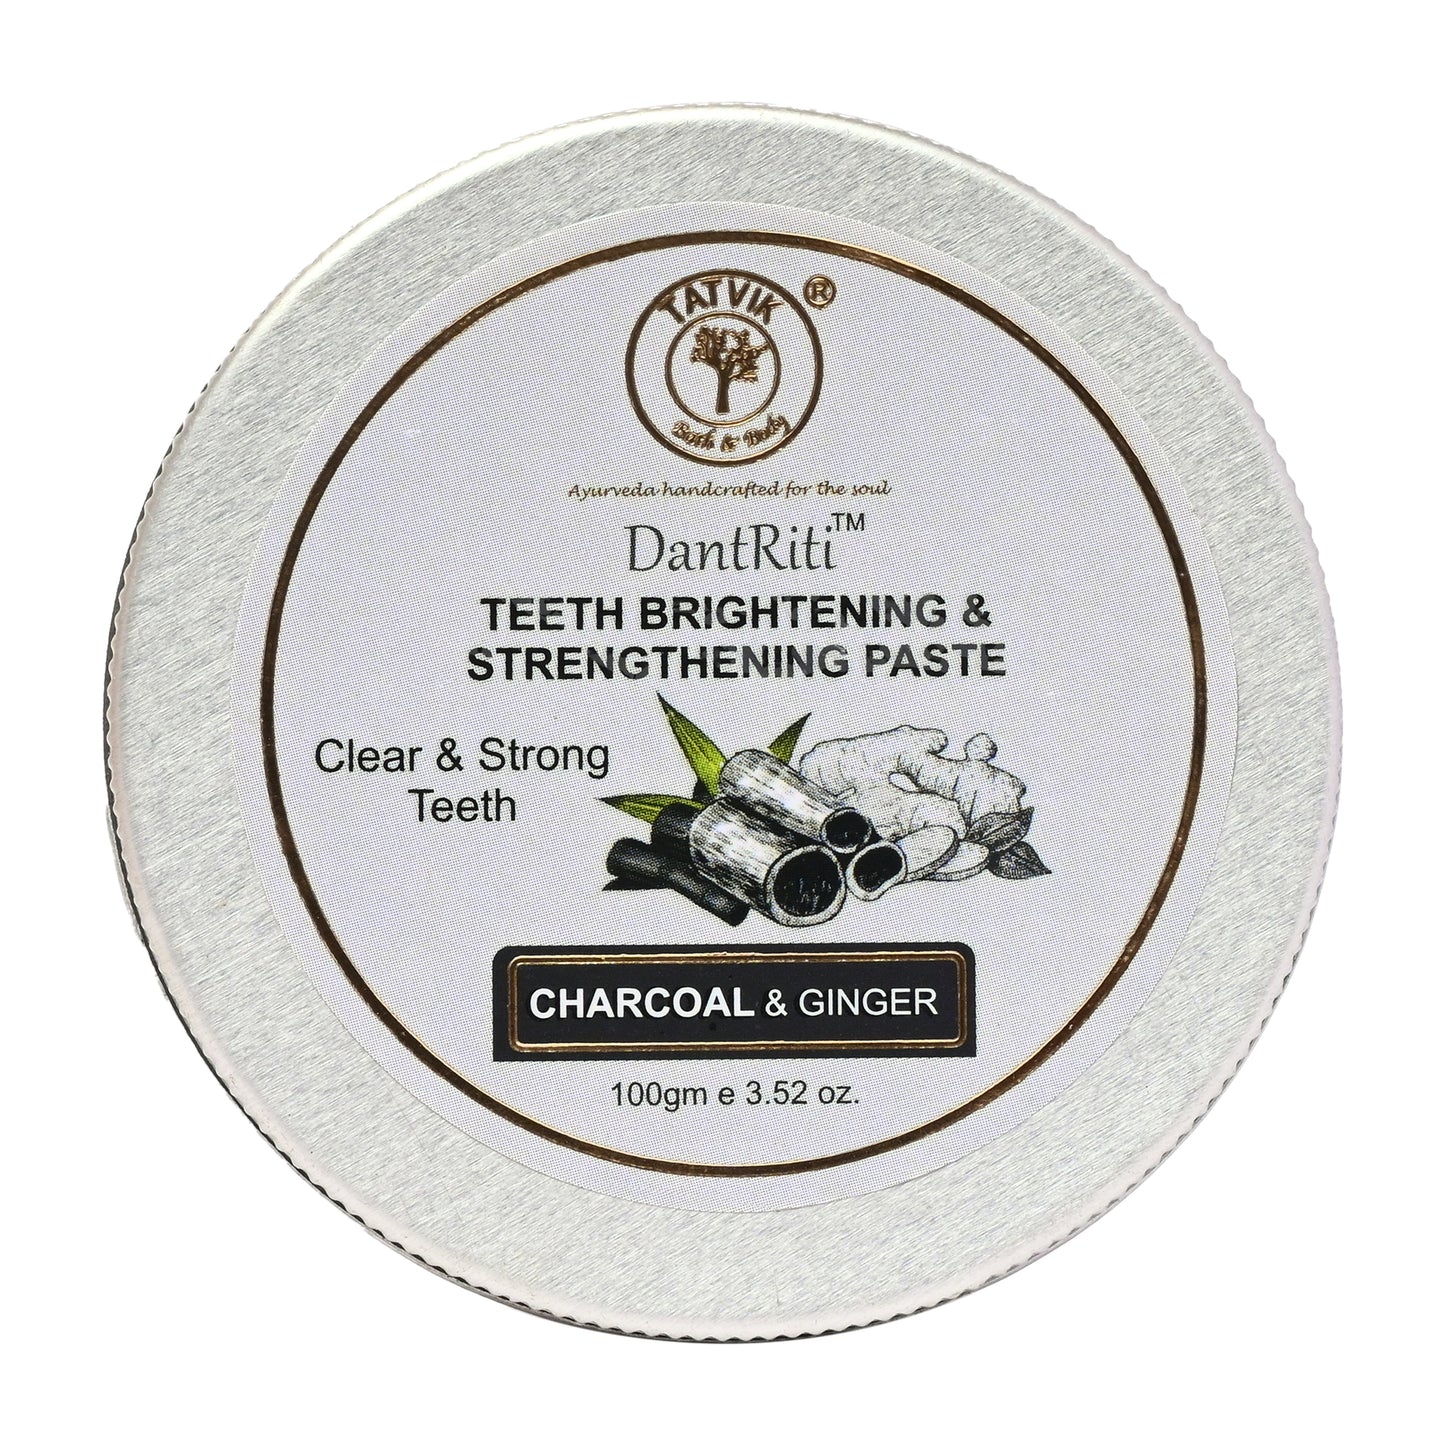 Dantriti Charcoal & Ginger - Teeth Brightening & Strengthening Paste - 100 Gm